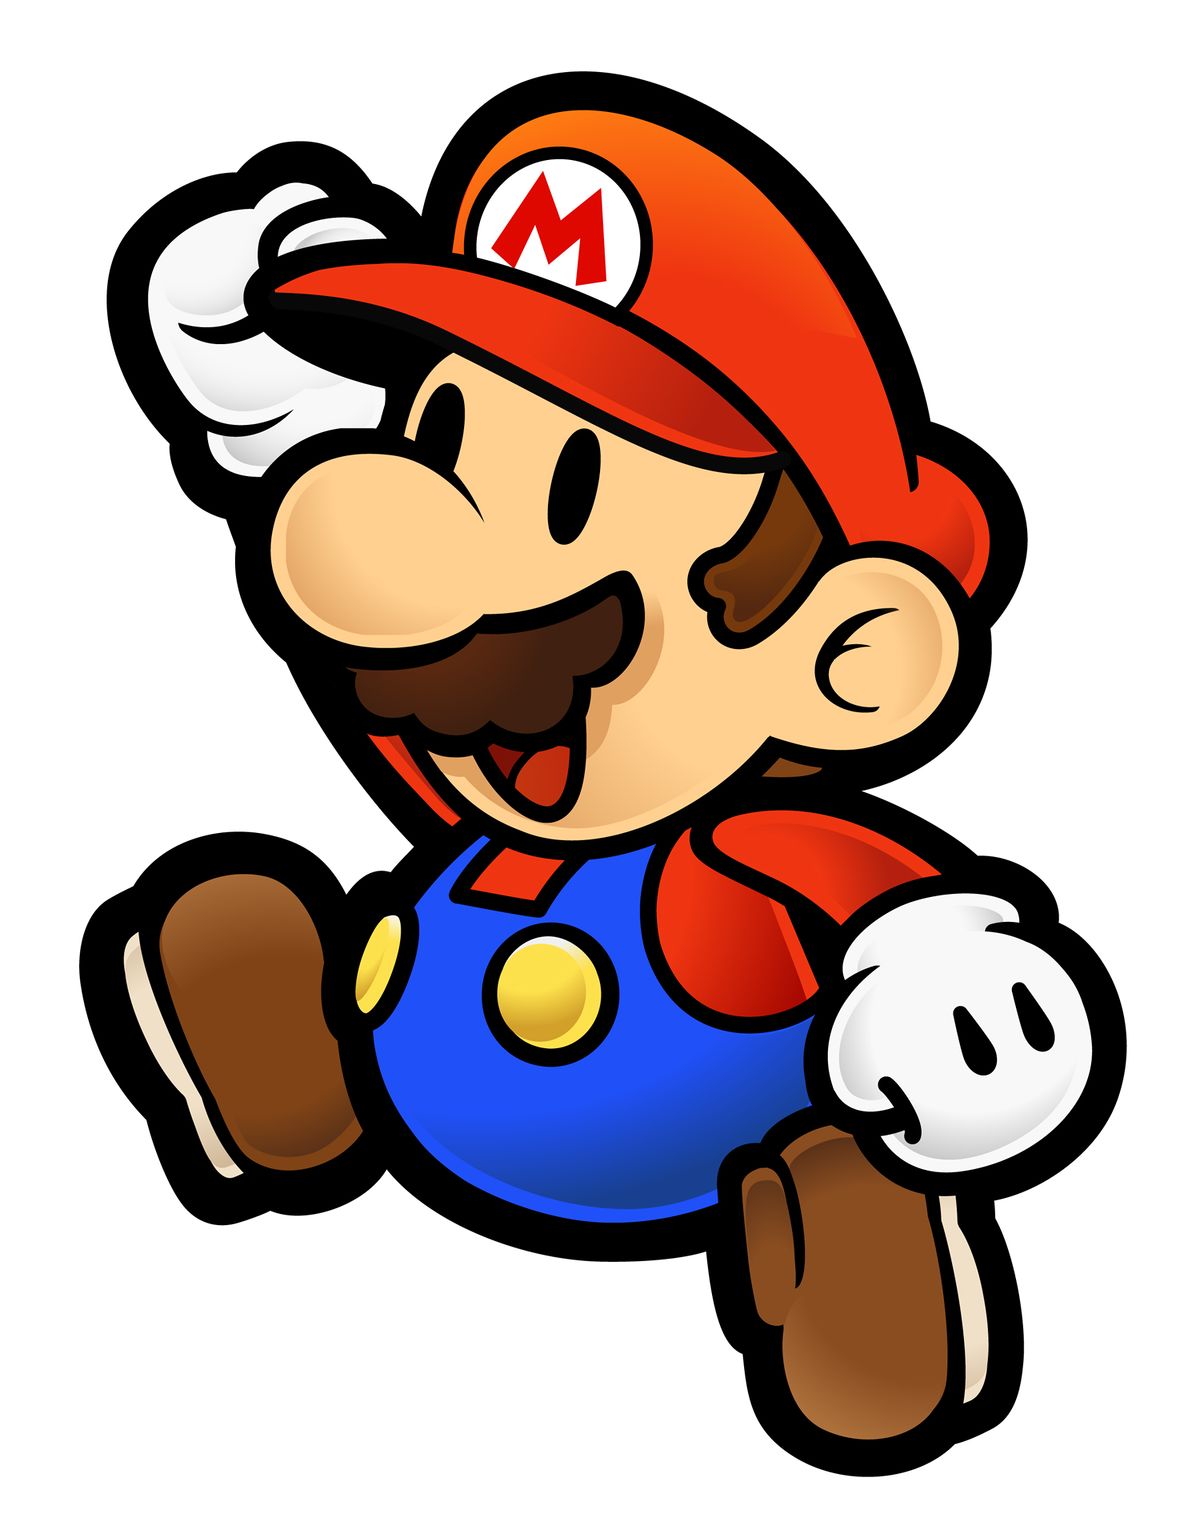 Doopliss - Super Mario Wiki, the Mario encyclopedia